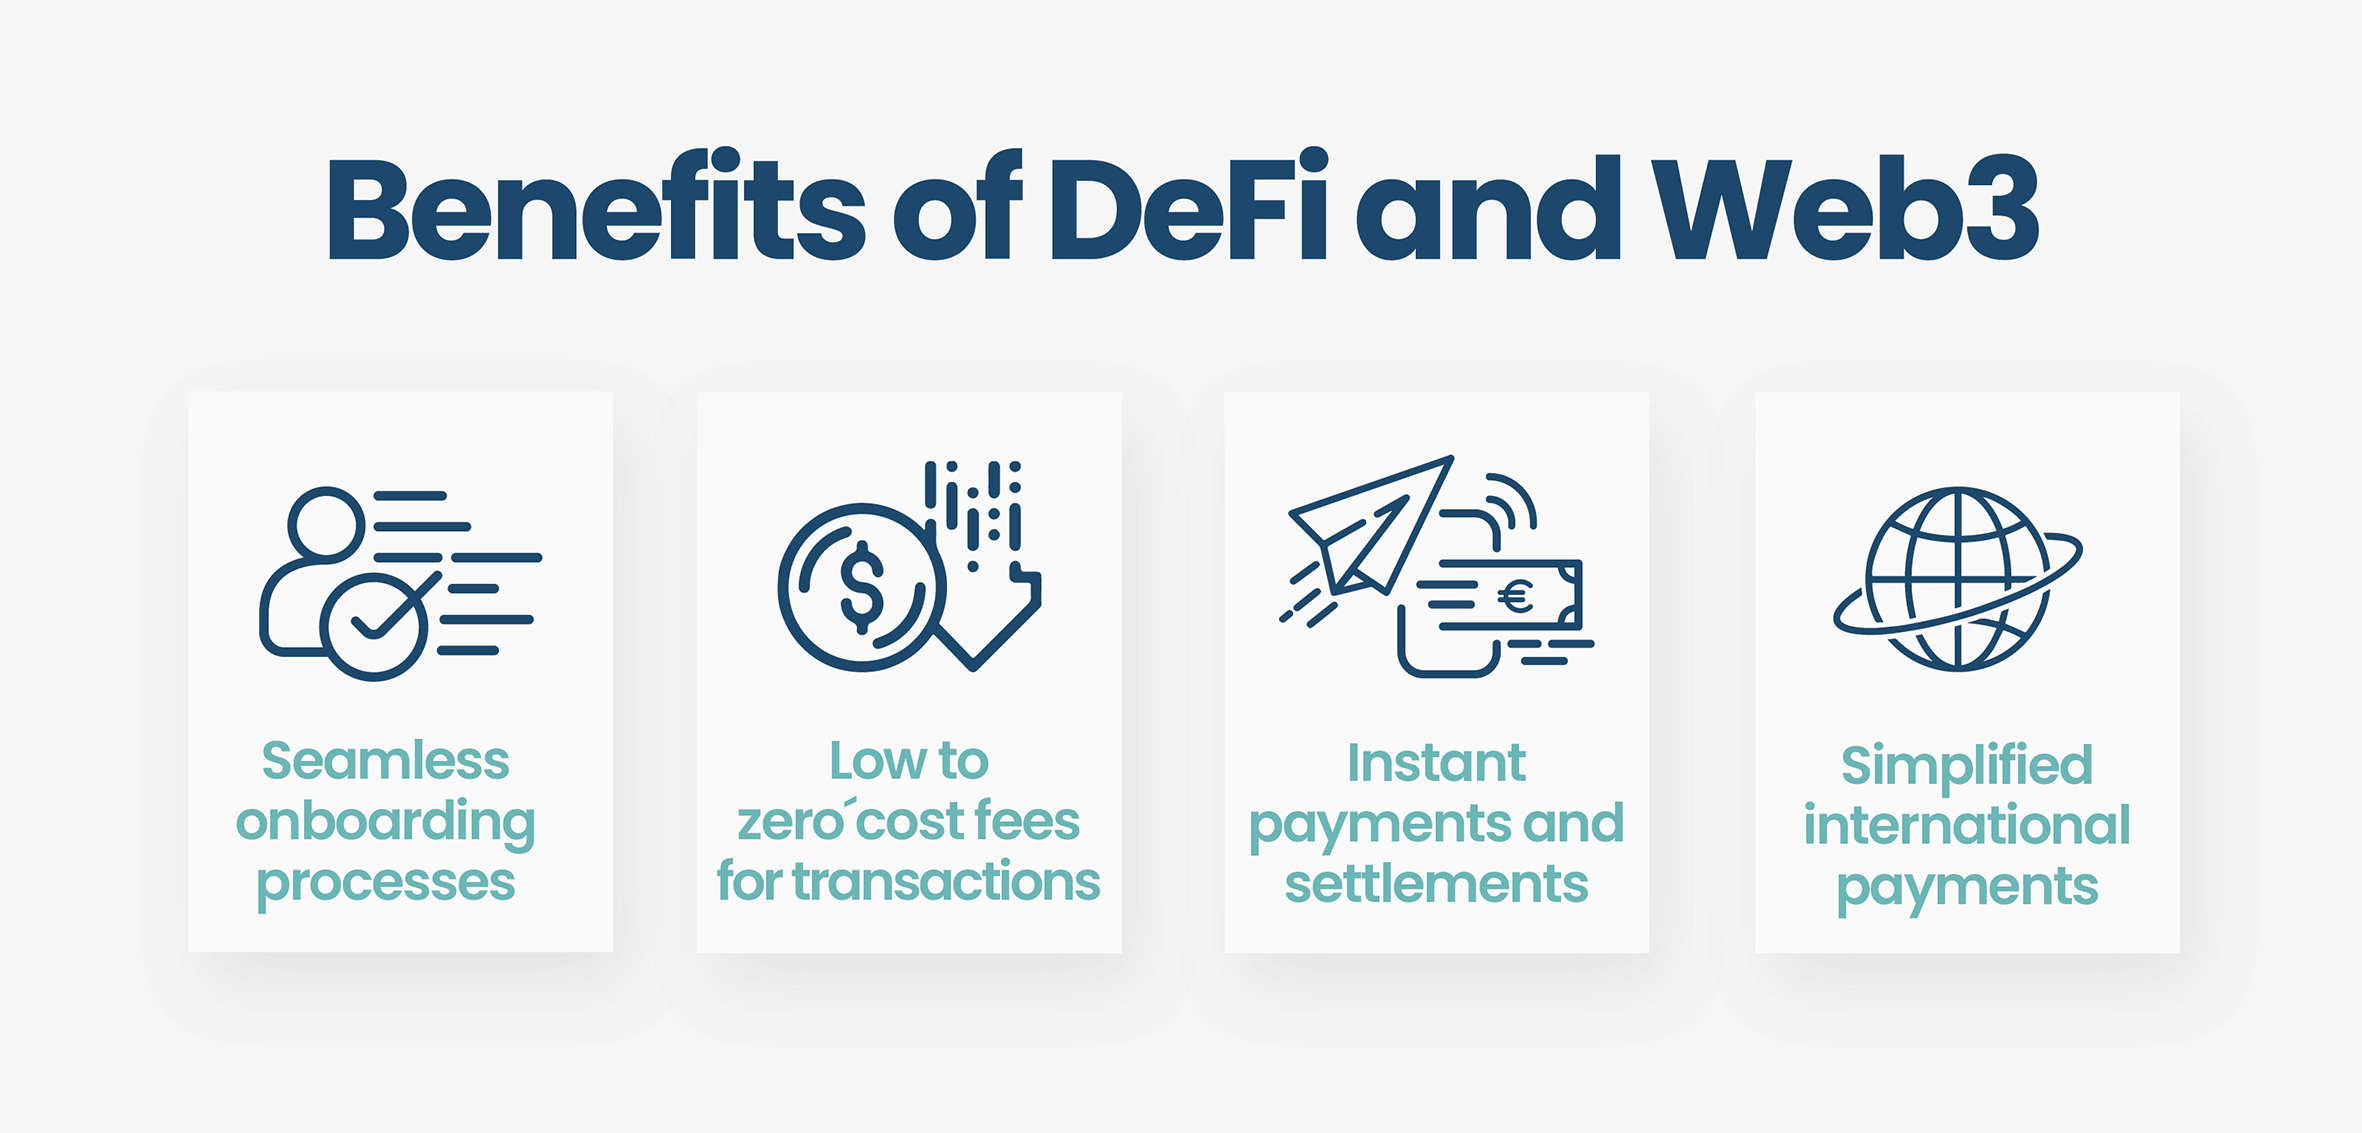 Benefits of DeFi Web3